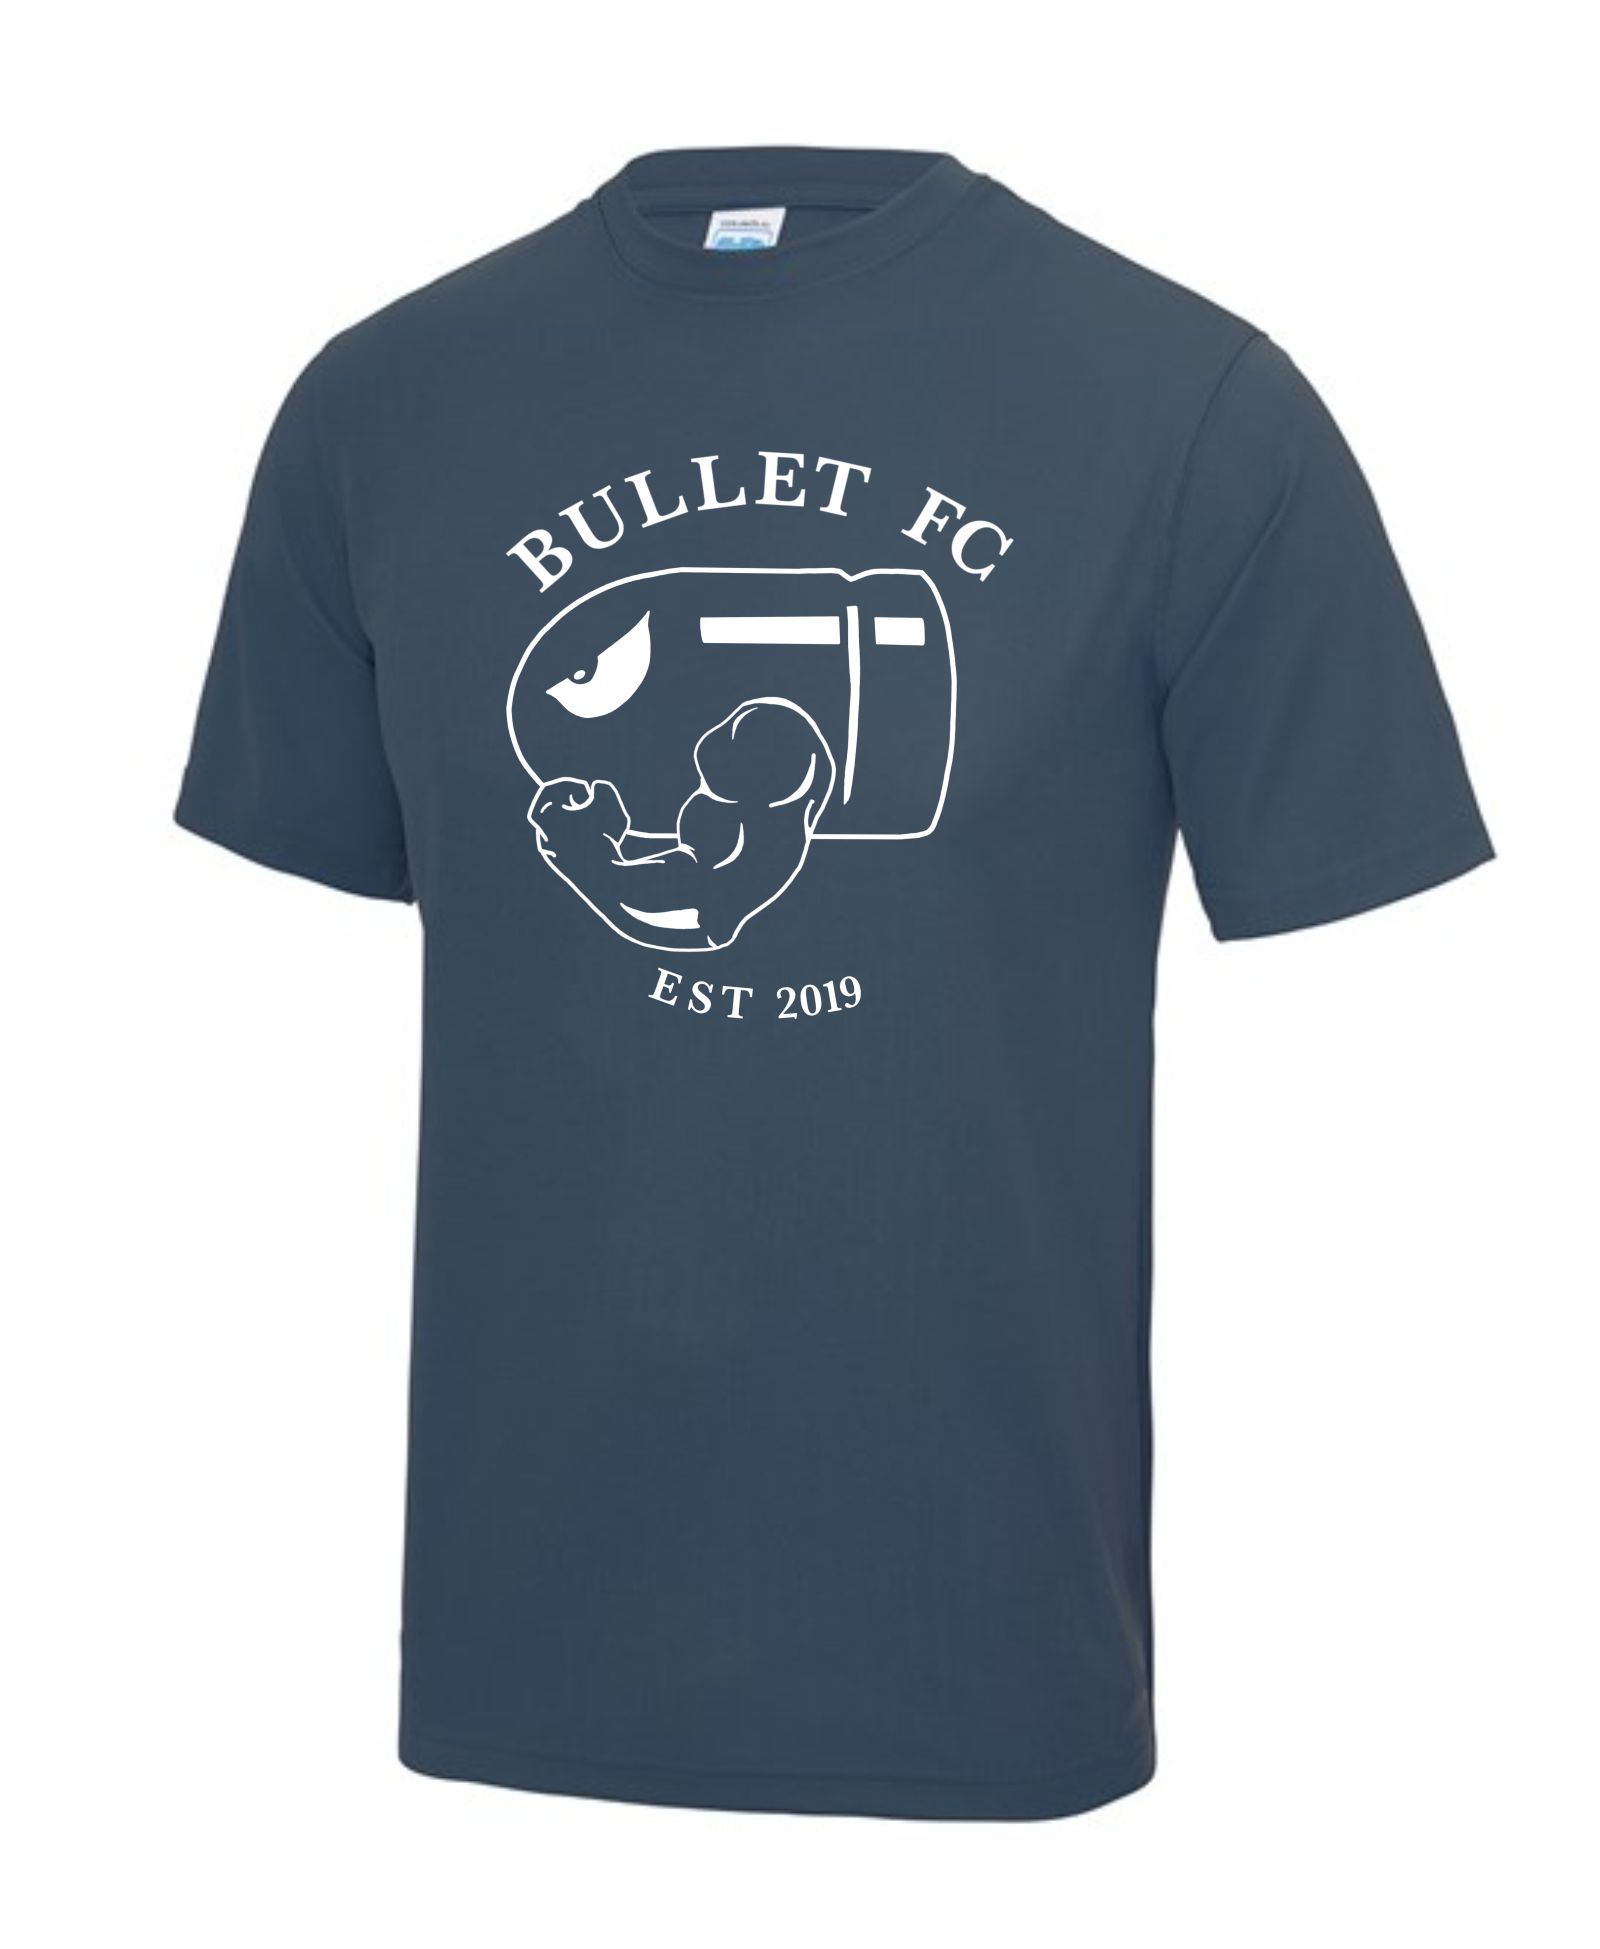 Bullet FC - Gym Shirt 